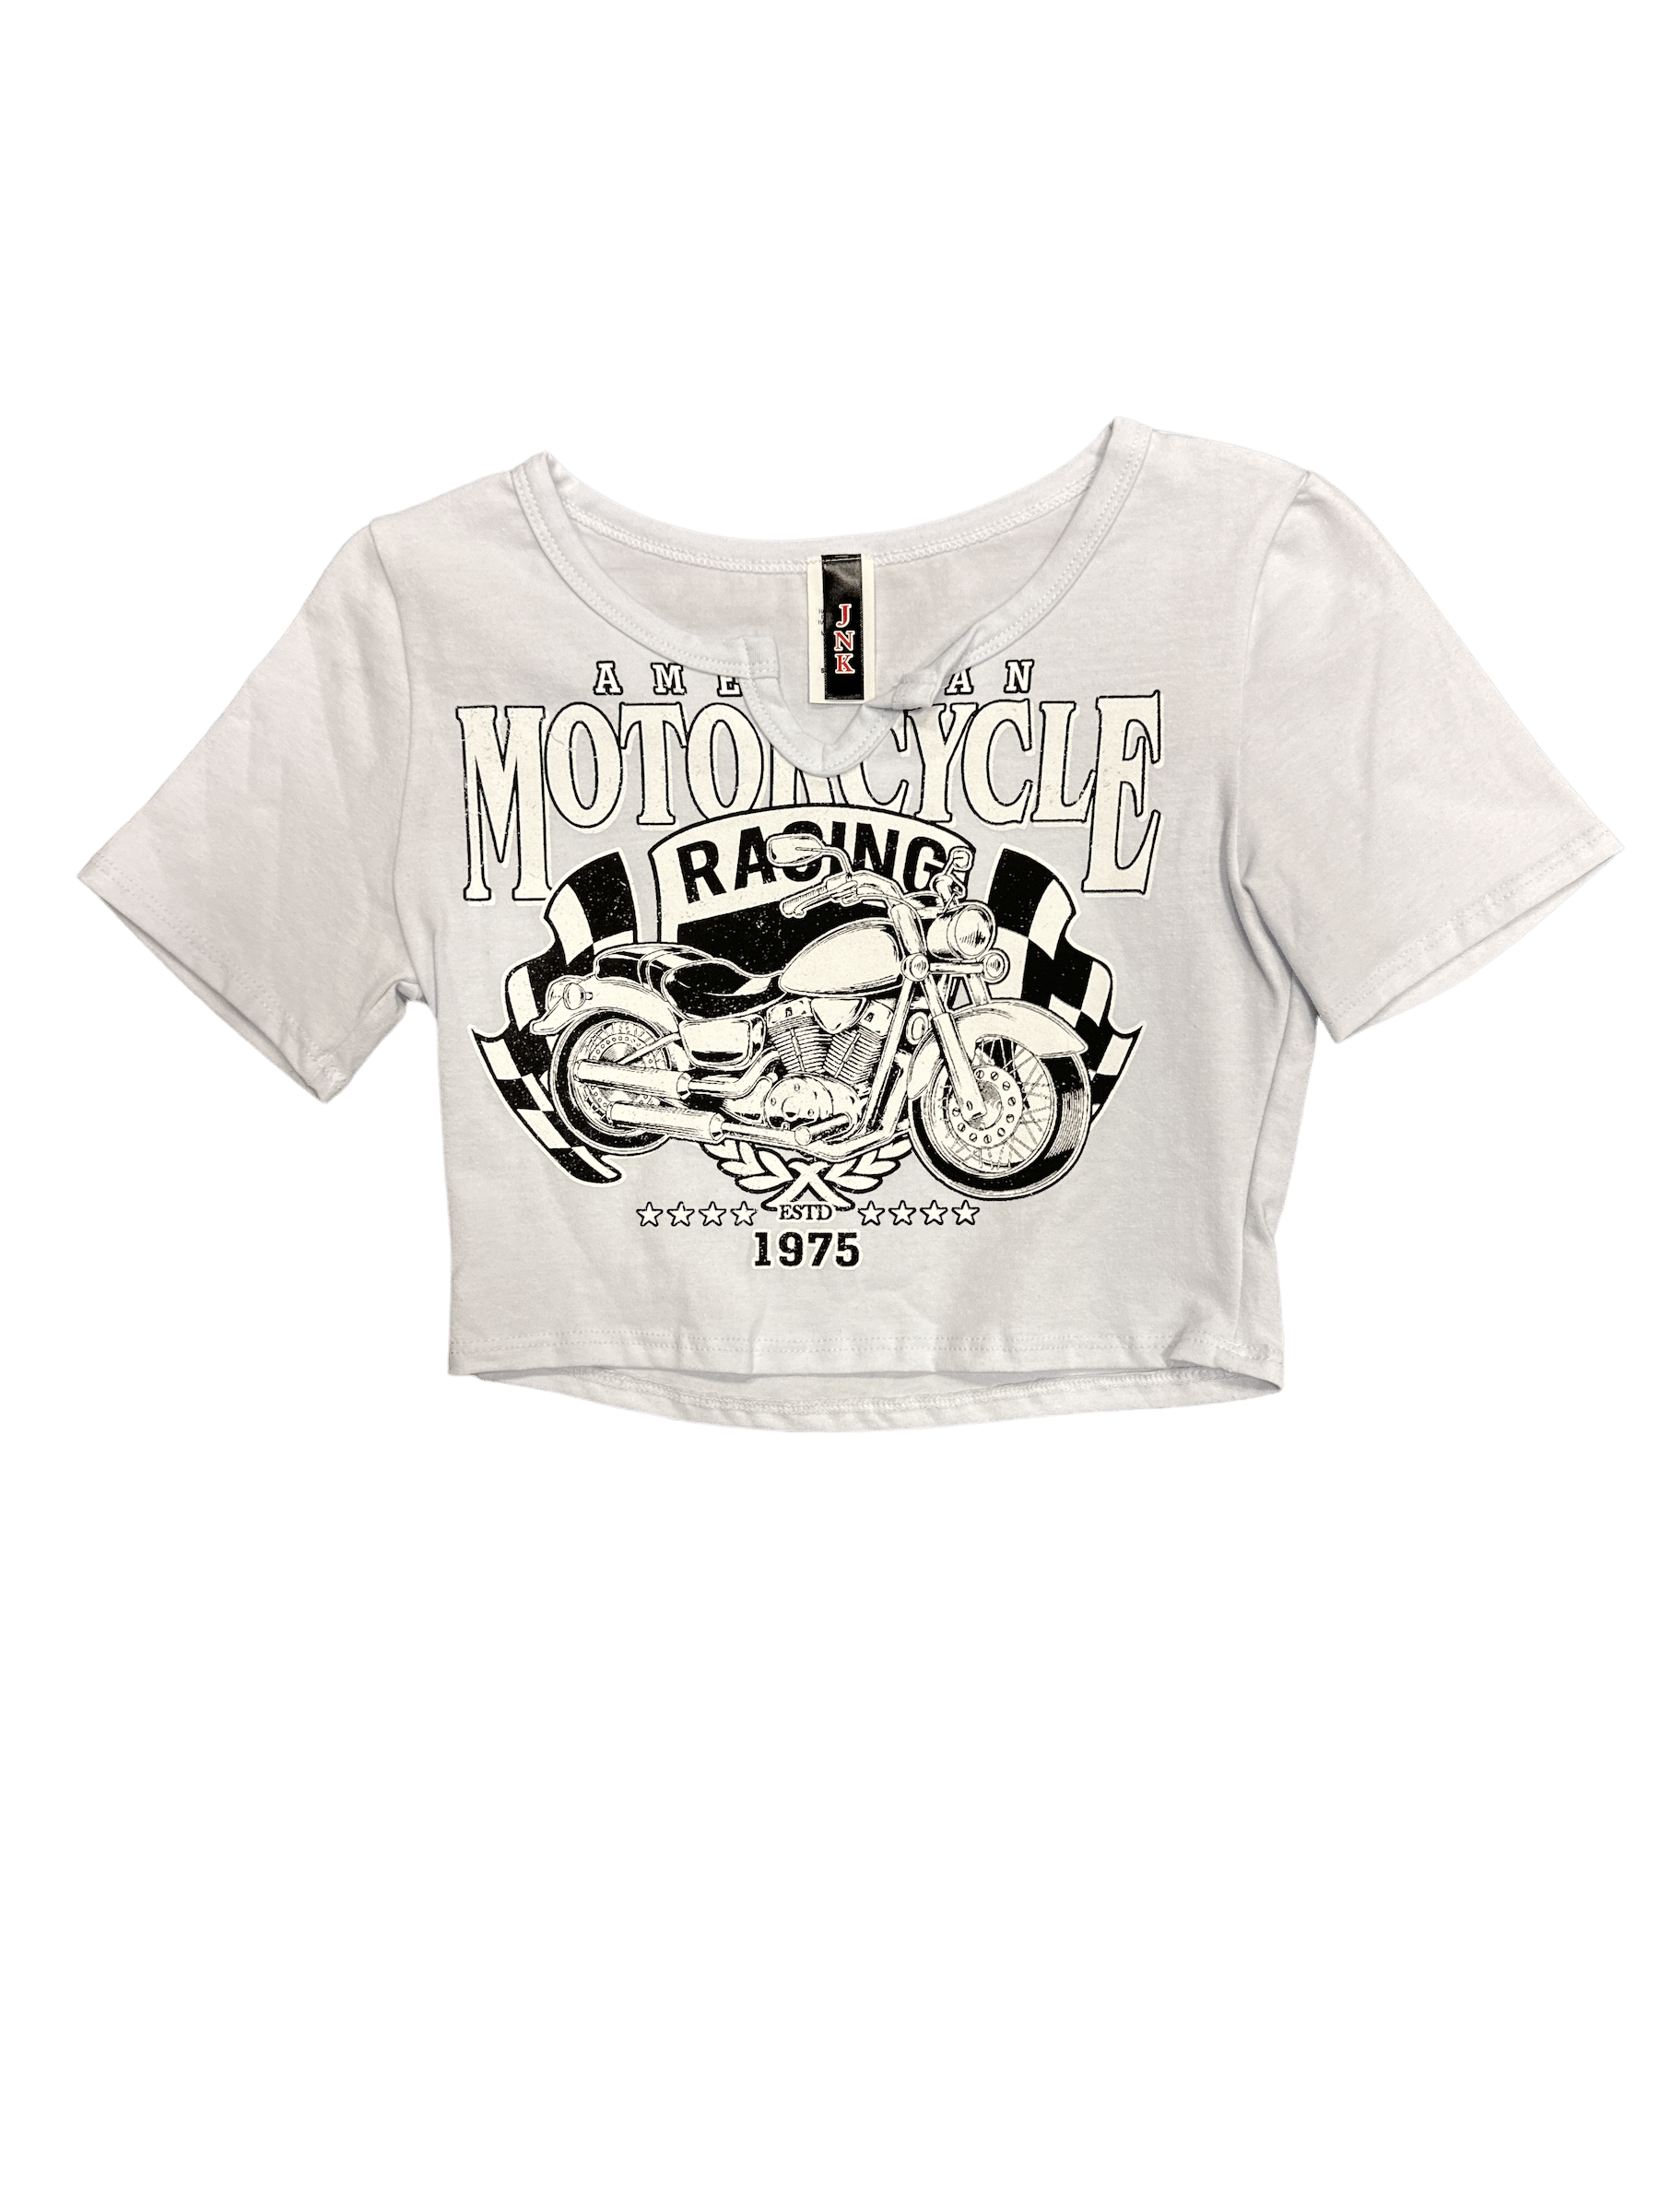 JNk T SHIRT White American cycle crop shirt